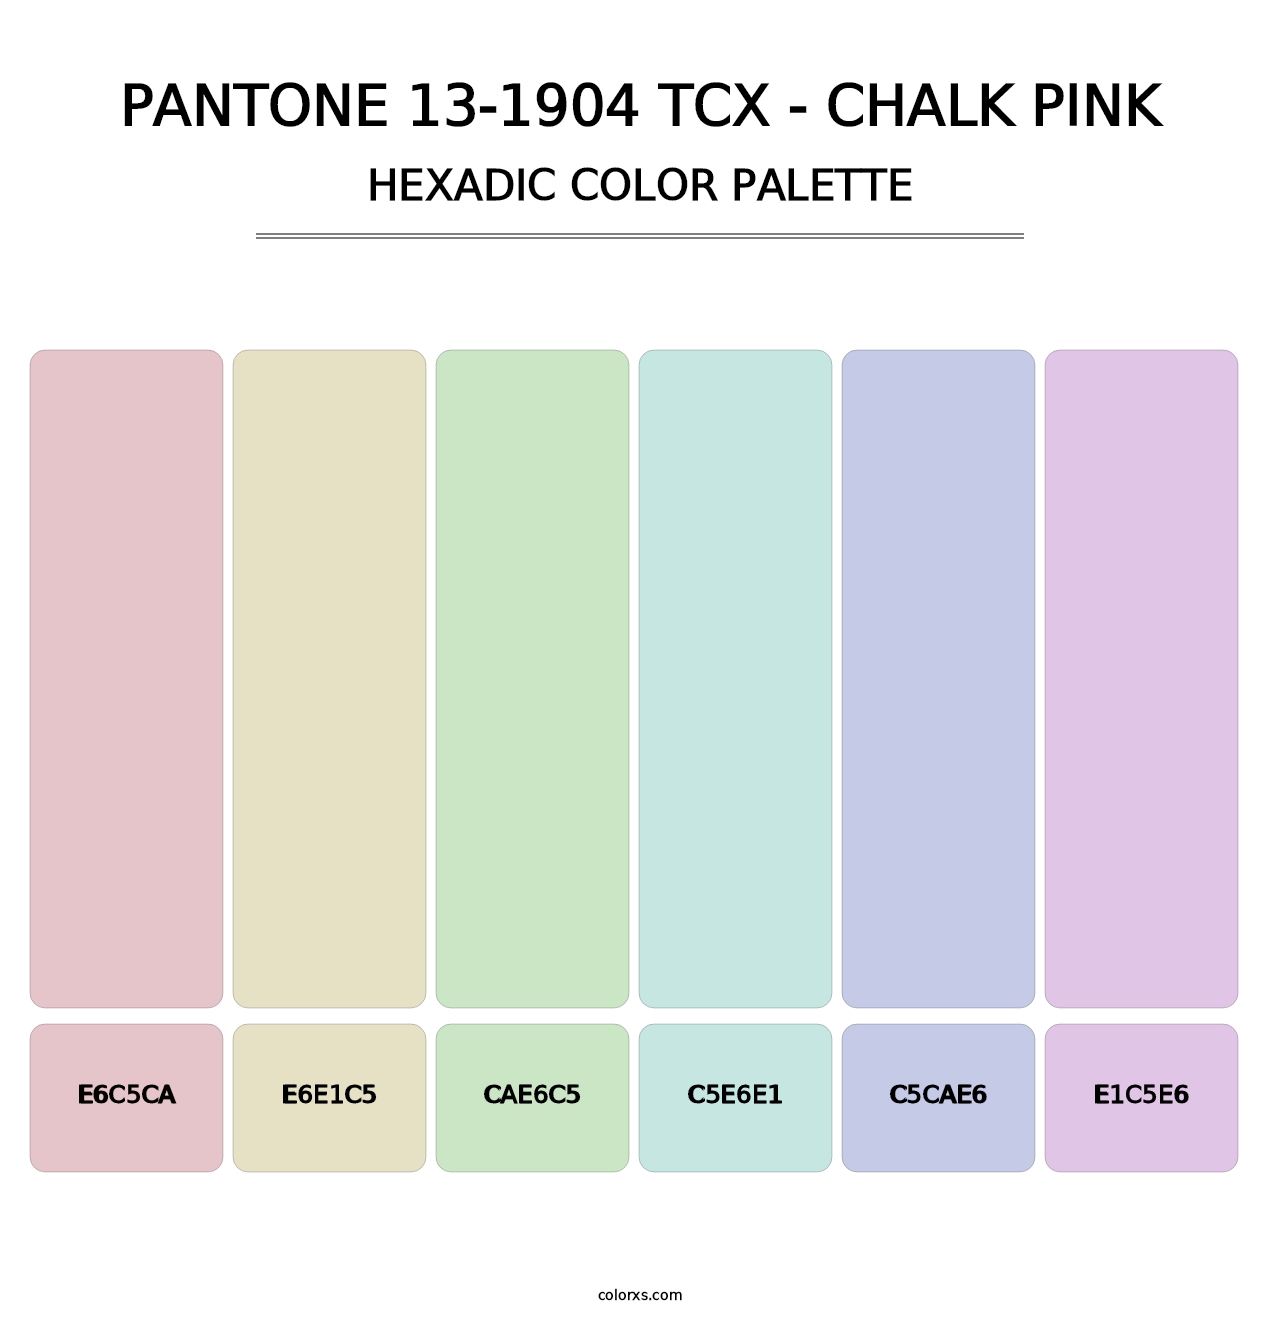 PANTONE 13-1904 TCX - Chalk Pink - Hexadic Color Palette